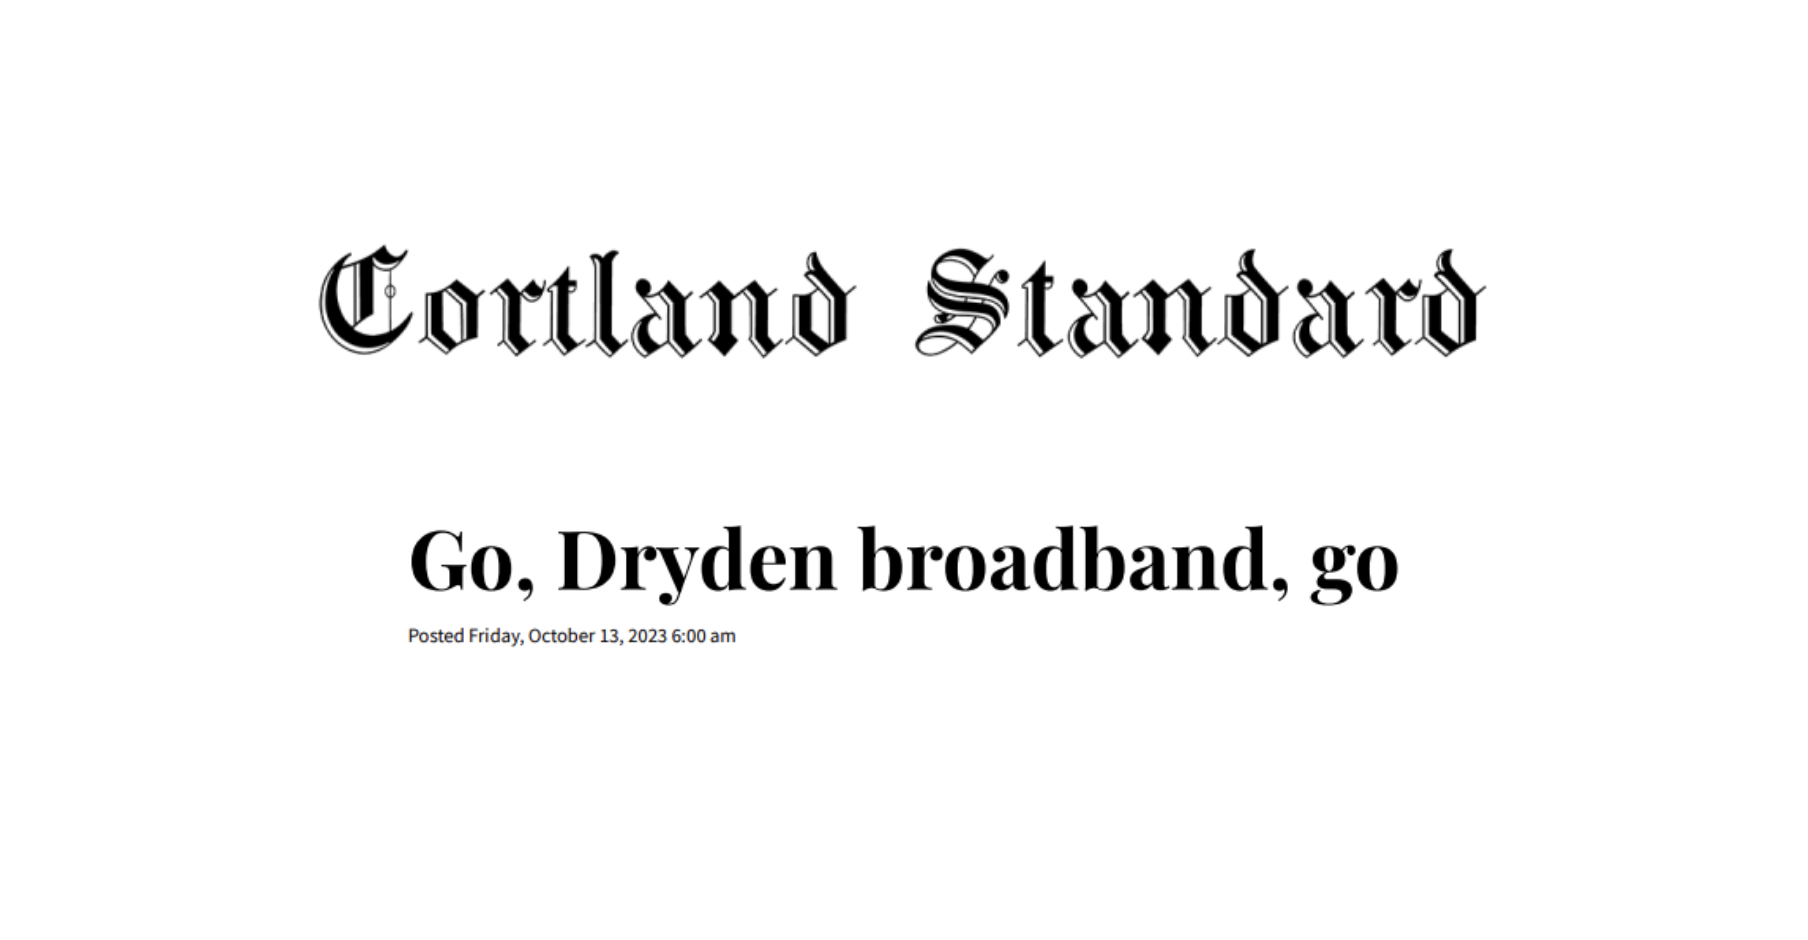 Cortland Standard, "Go, Dryden broadband, go"